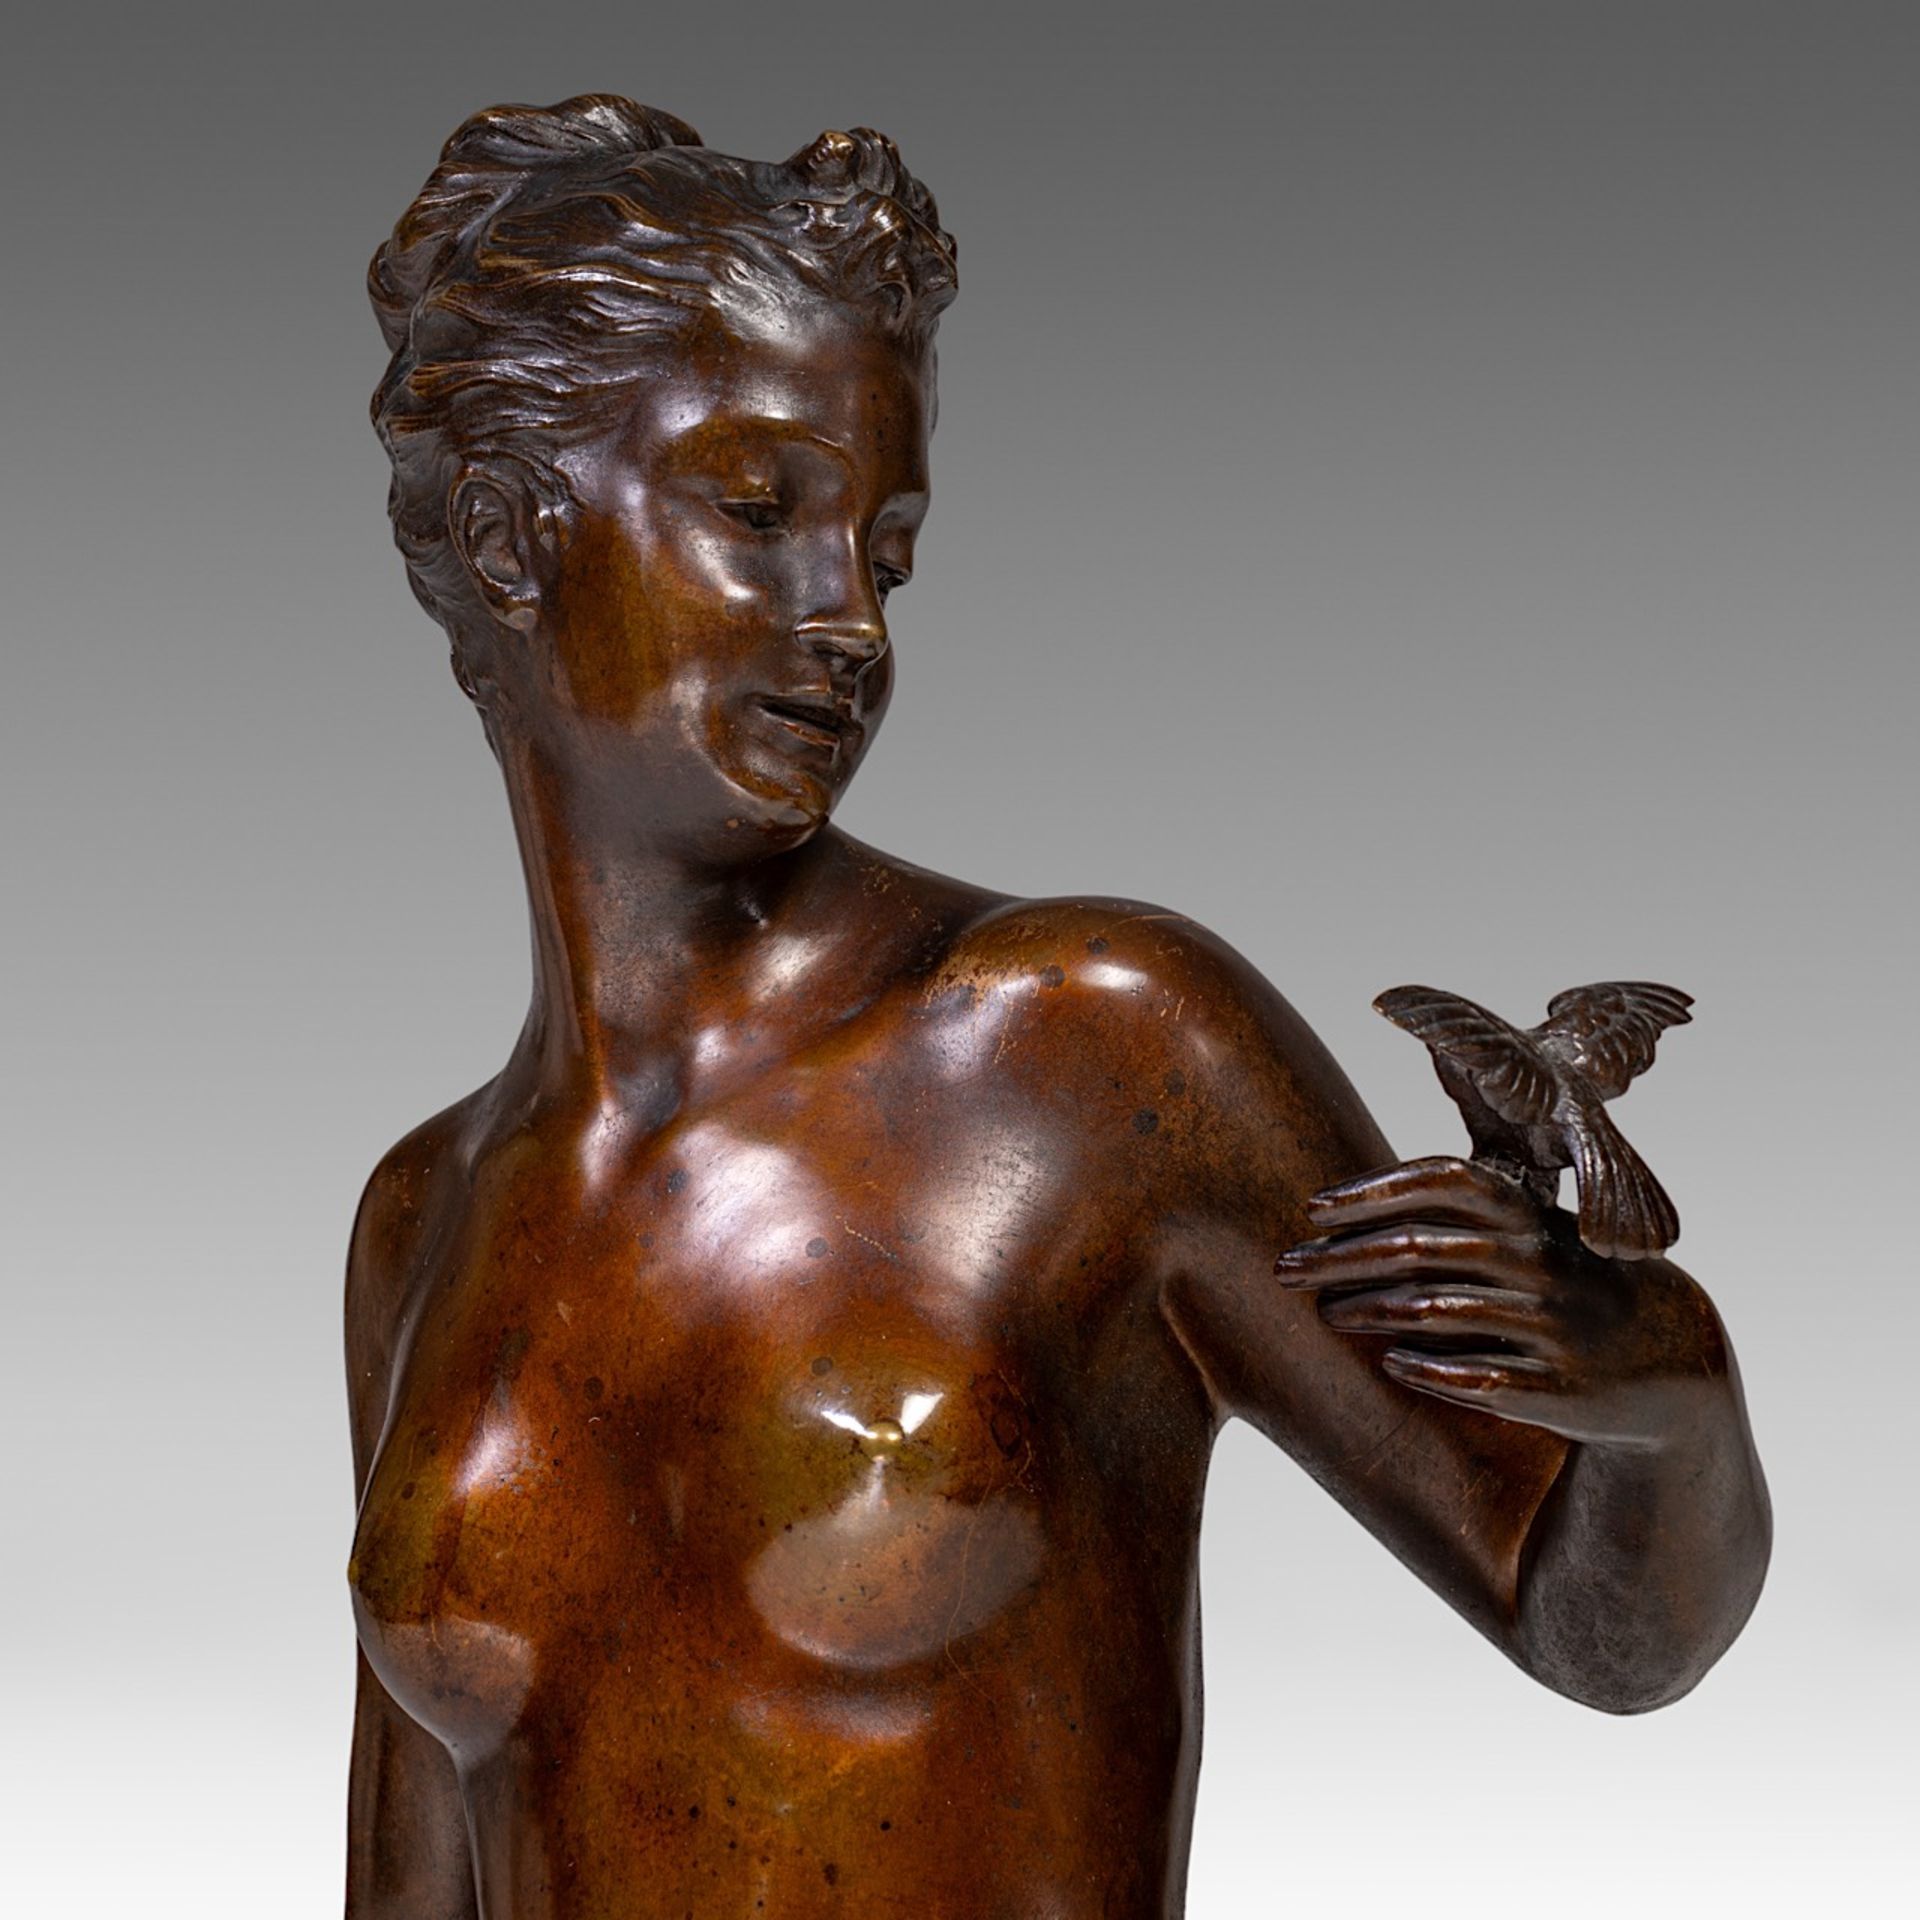 Signed 'Telemaque', Venus with bird, patinated bronze, H 75 cm - Image 7 of 10